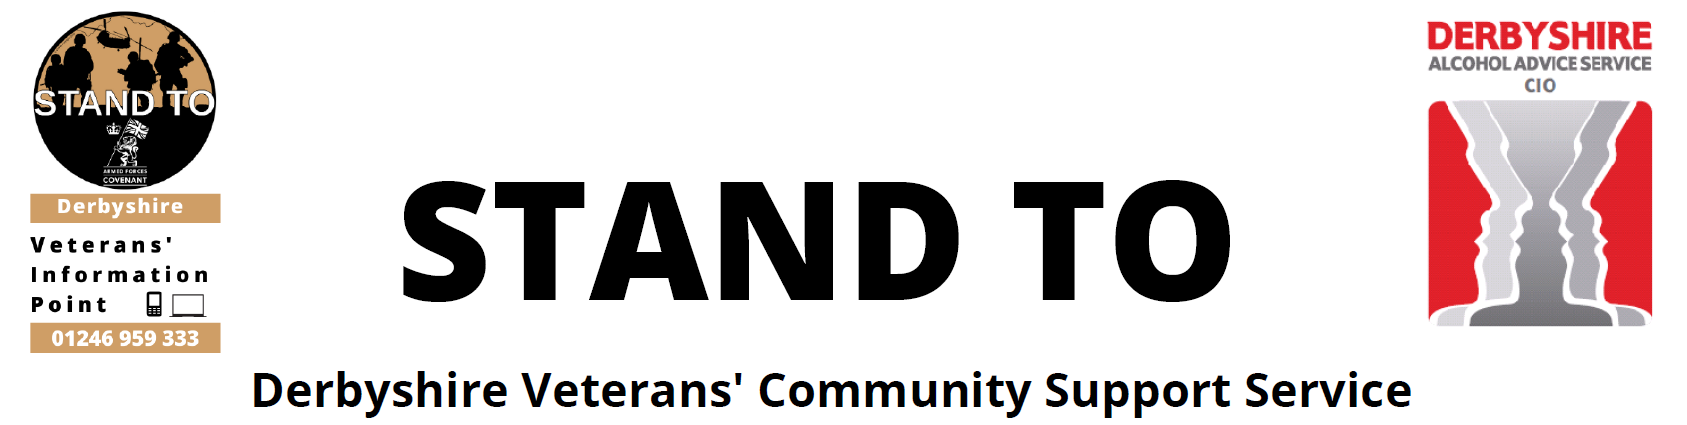 Stand TO. Derbyshire Veterans